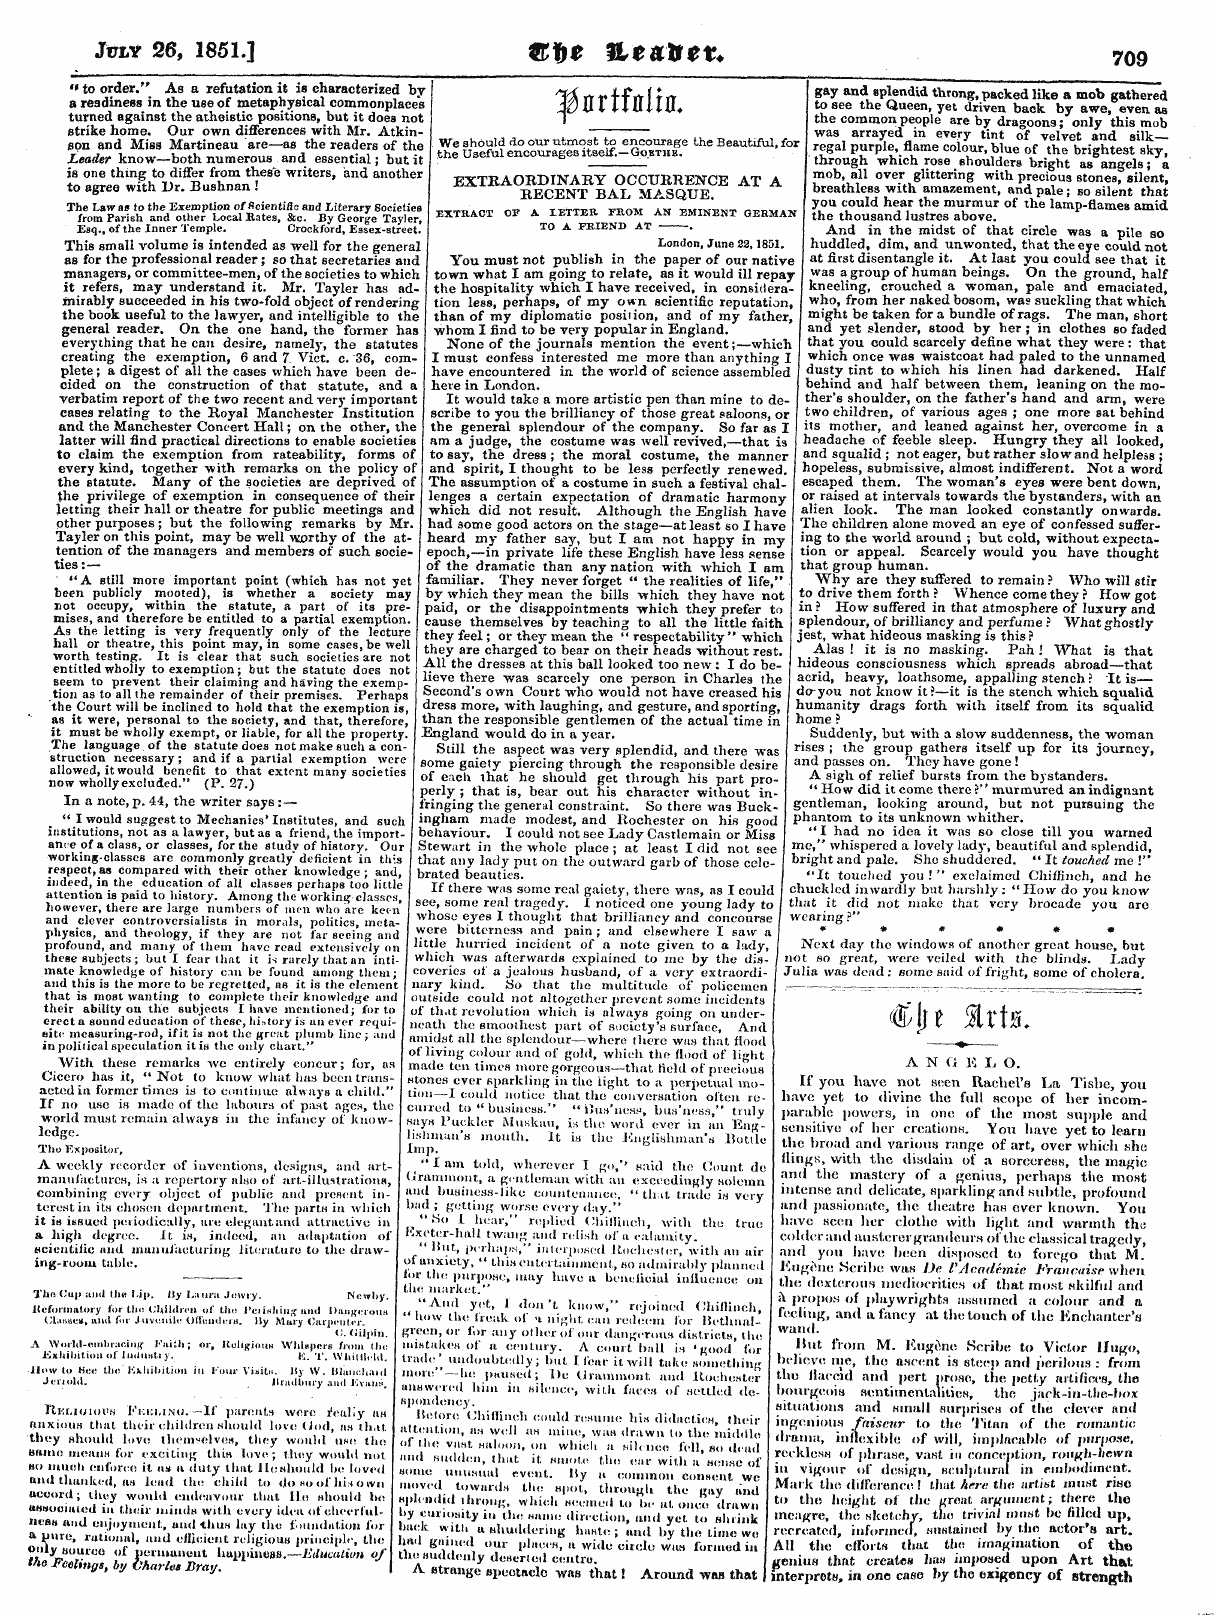 Leader (1850-1860): jS F Y, Country edition - ^Nrtfnitn.